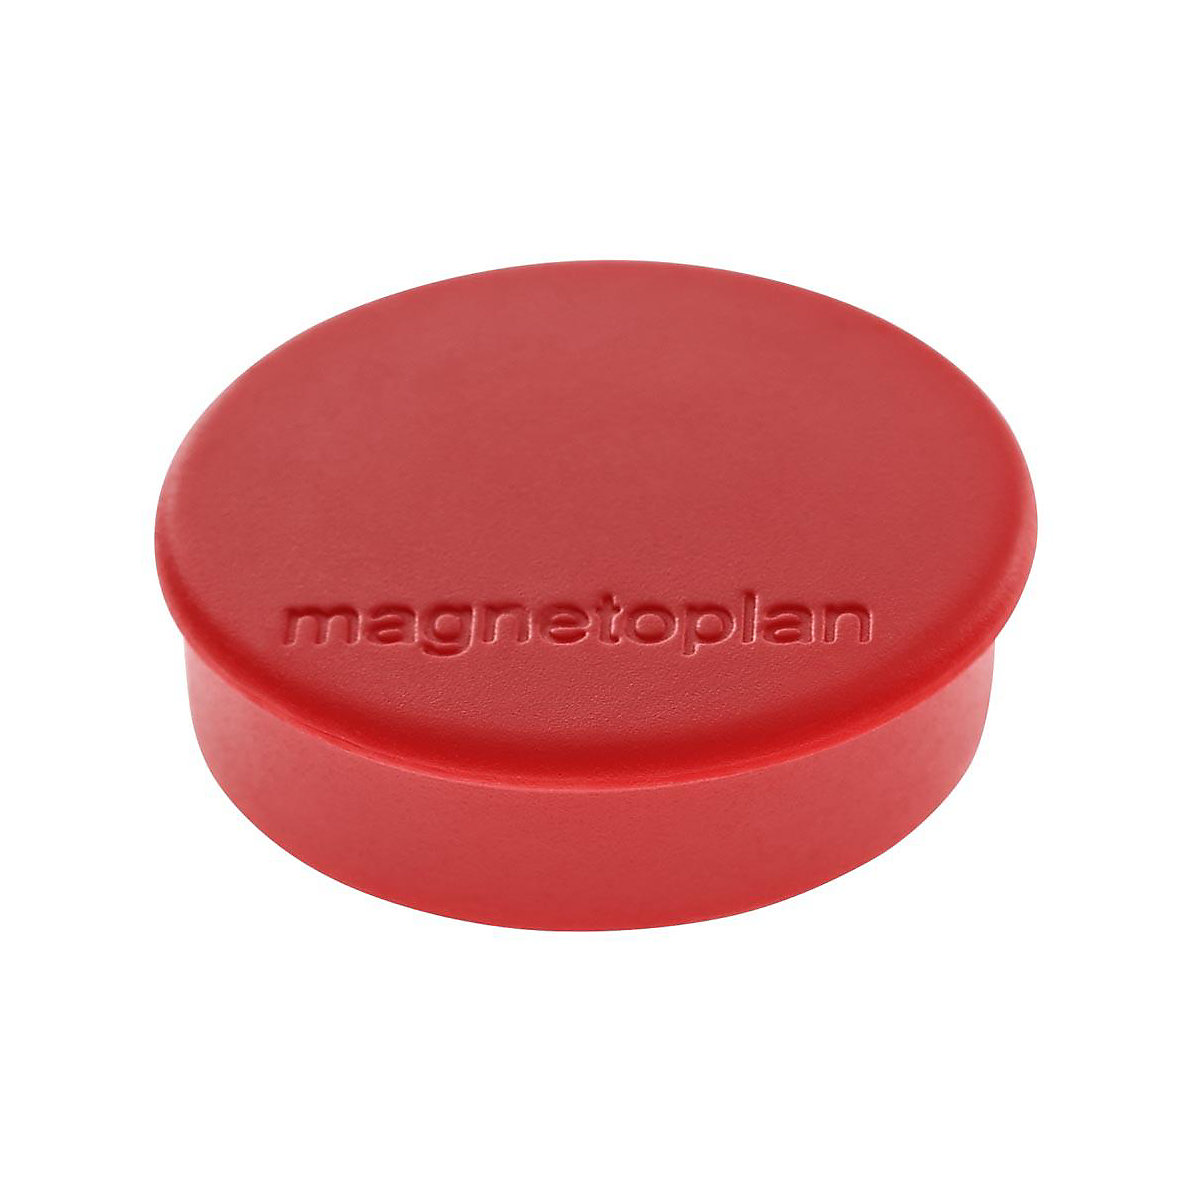 Magnet DISCOFIX HOBBY magnetoplan, Ø 25 mm, VE 100 Stk, rot-9